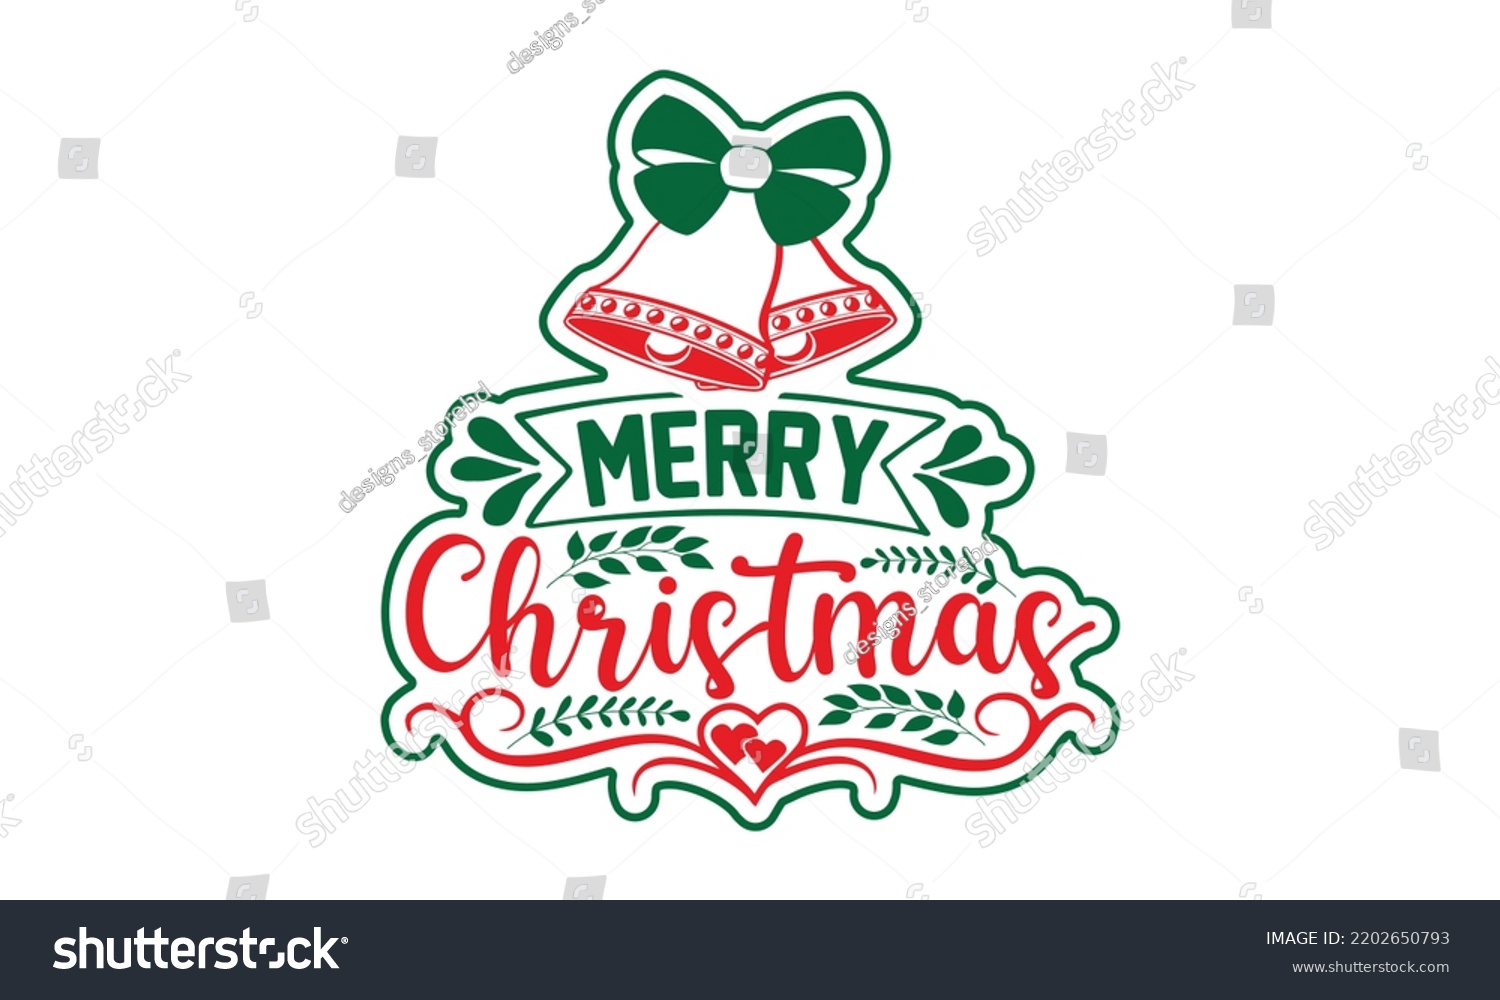 SVG of Christmas svg, Christmas svg design bundle, T shirt Calligraphy phrase for Christmas. Hand drawn lettering for Xmas greetings cards, invitations. Good for t-shirt, mug, gift, printing press. Designs svg